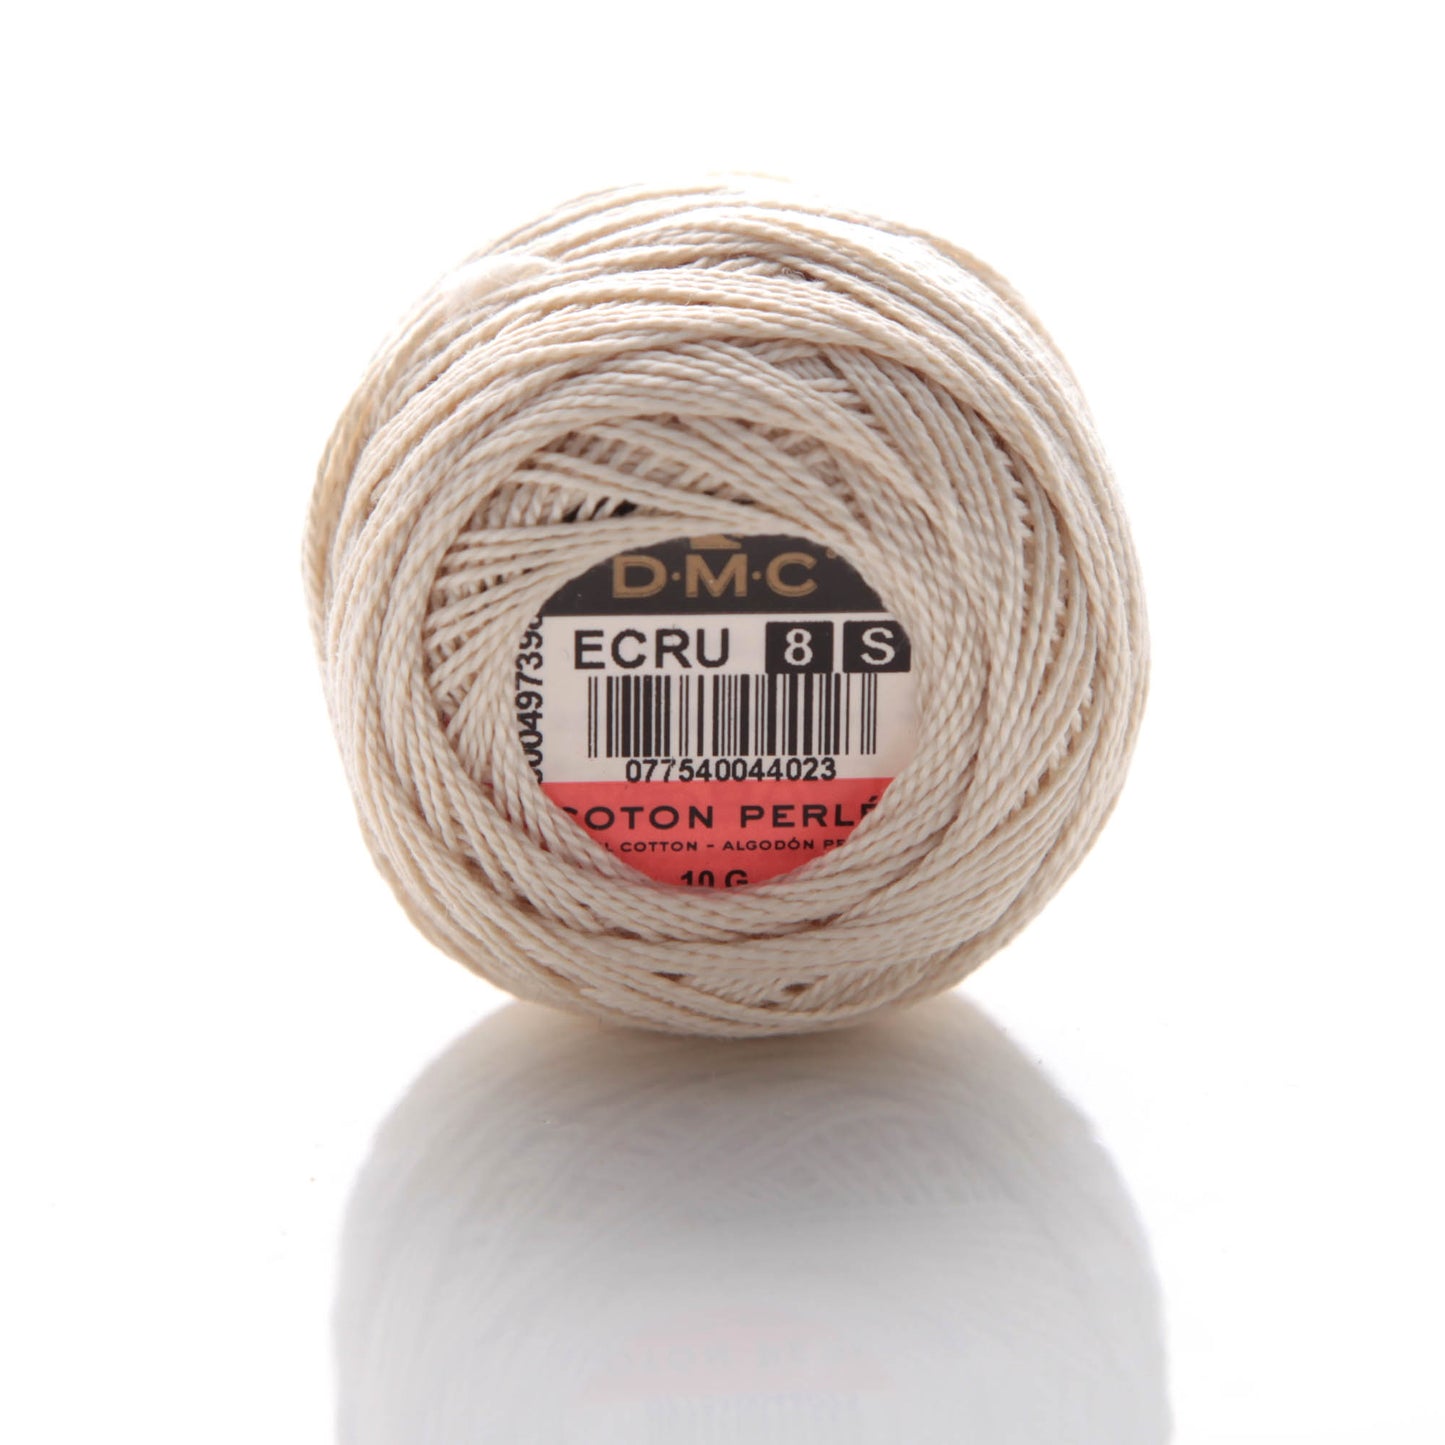 DMC Perle Cotton, Size 8, DMC 738, Pearl Cotton Ball, Very Light